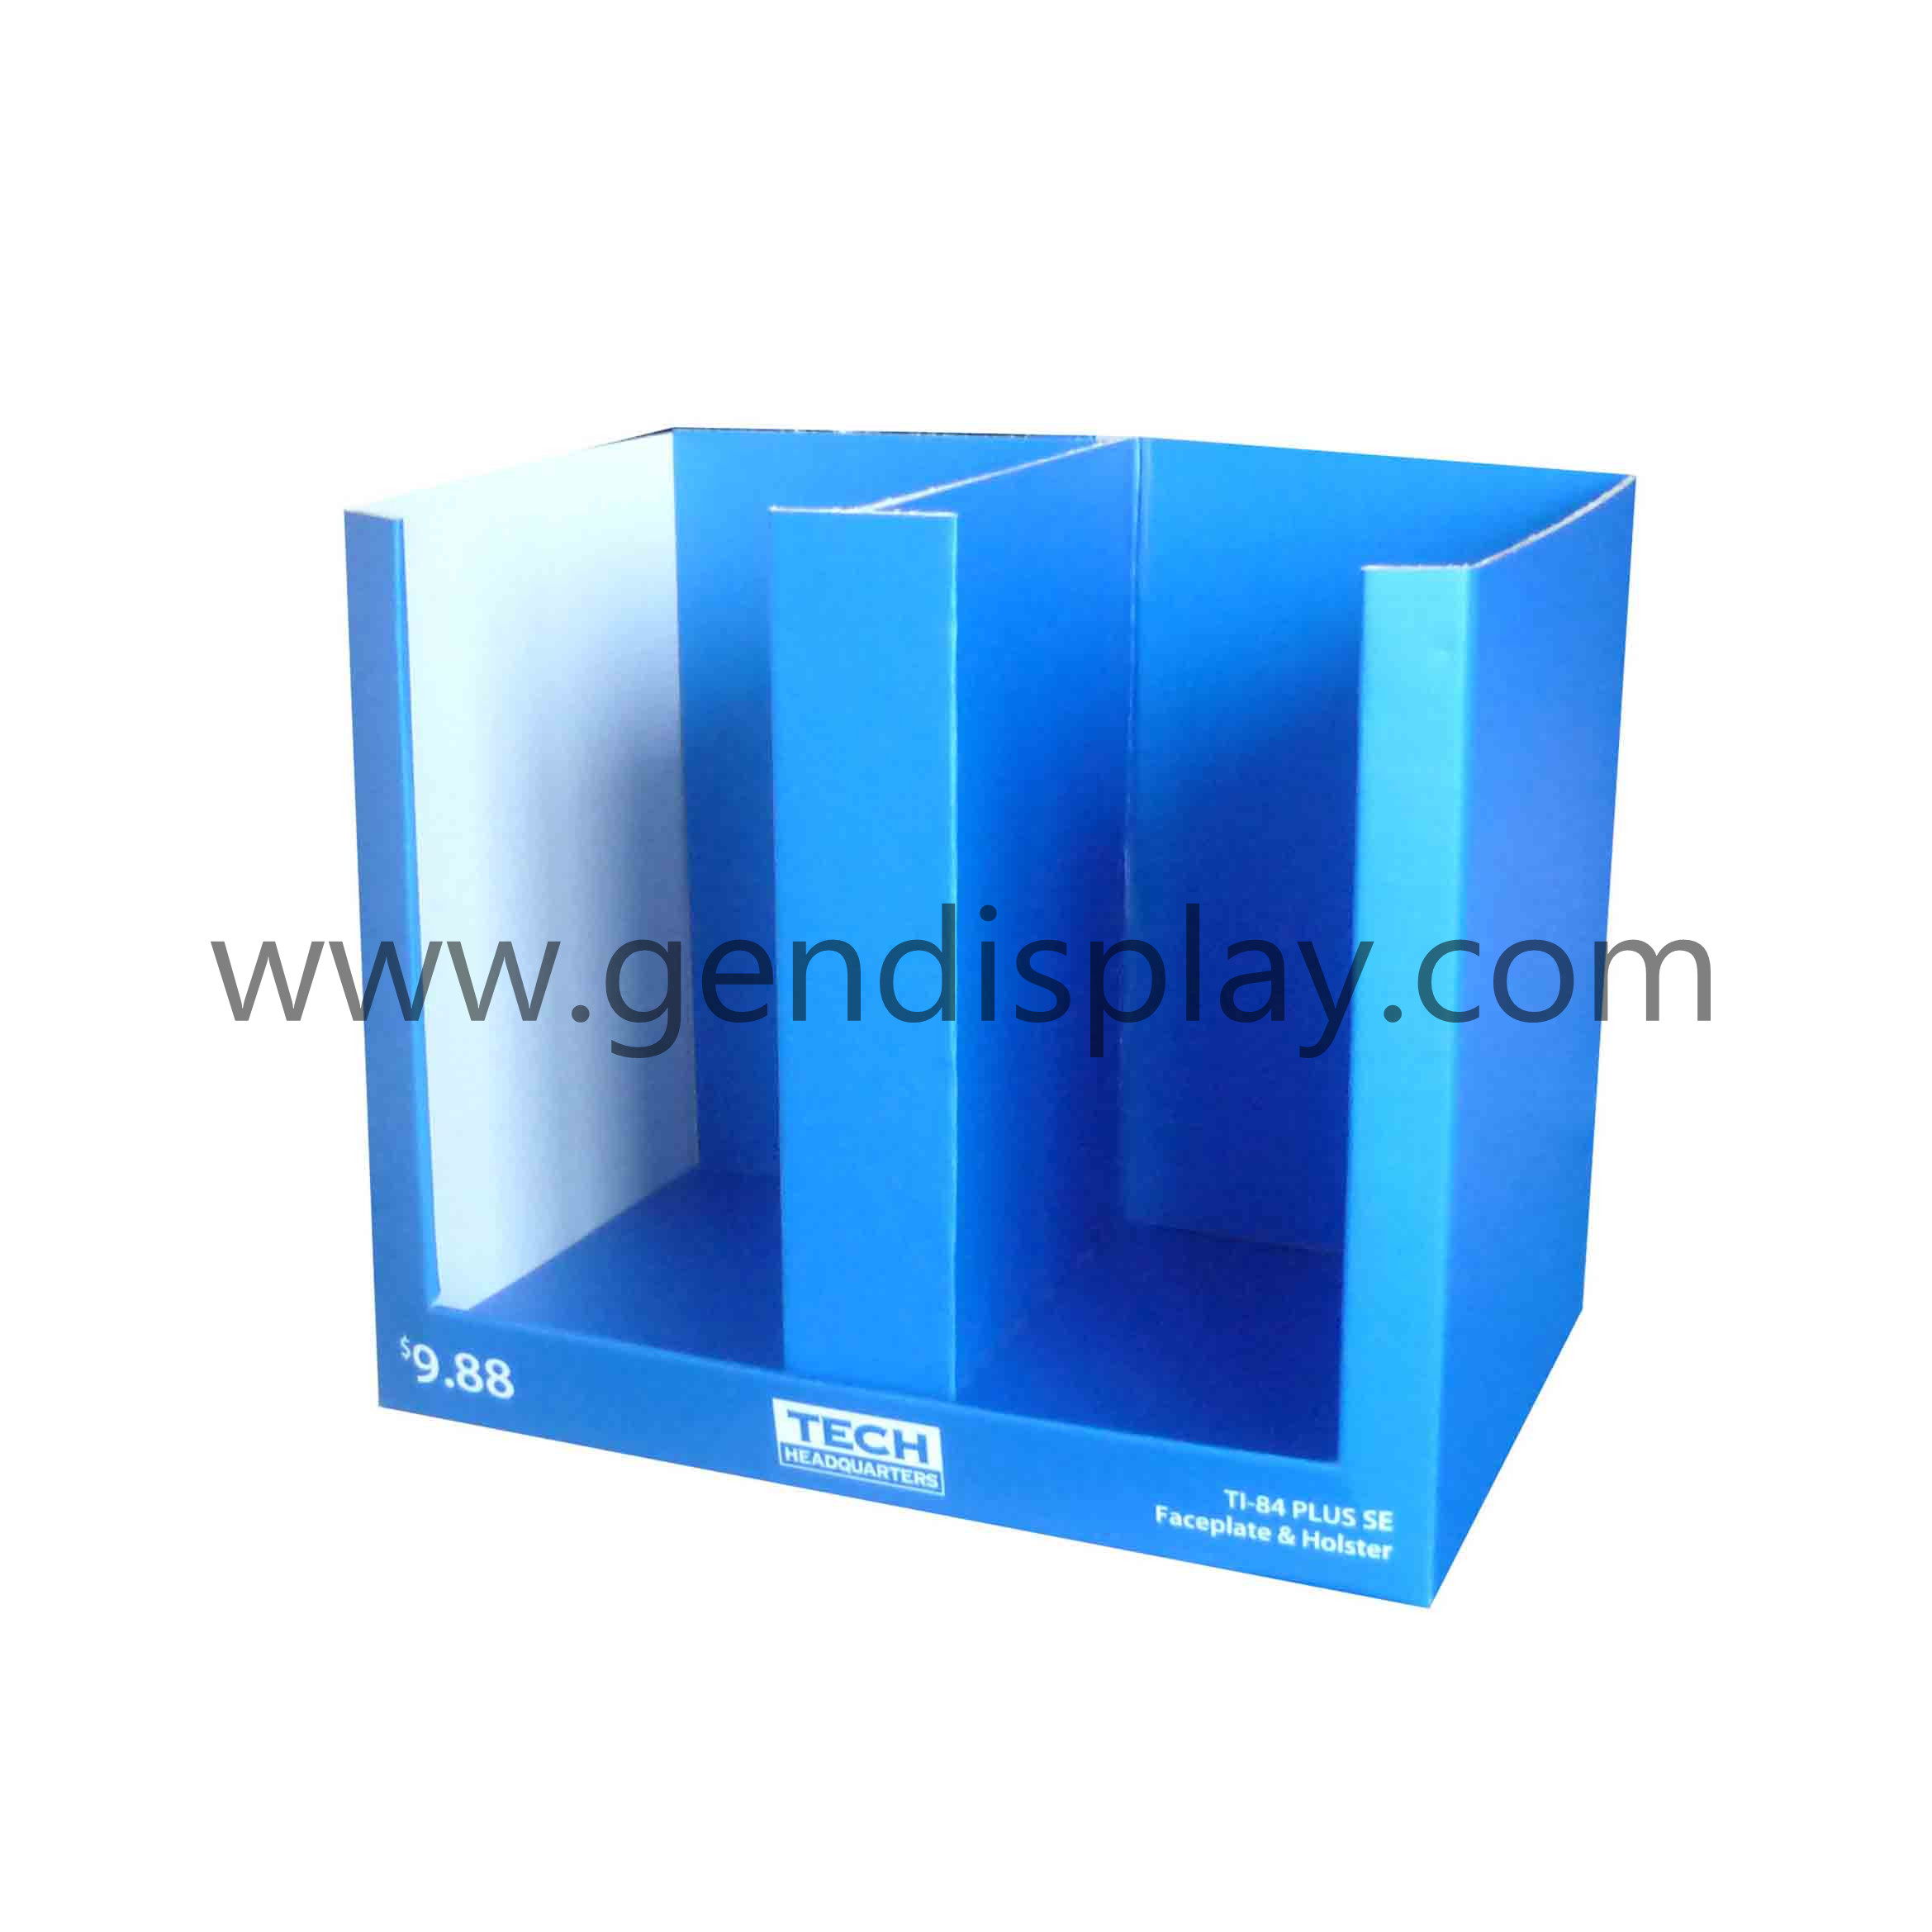 Pop Cardboard Counter Toys Display Box (GEN-CD048)